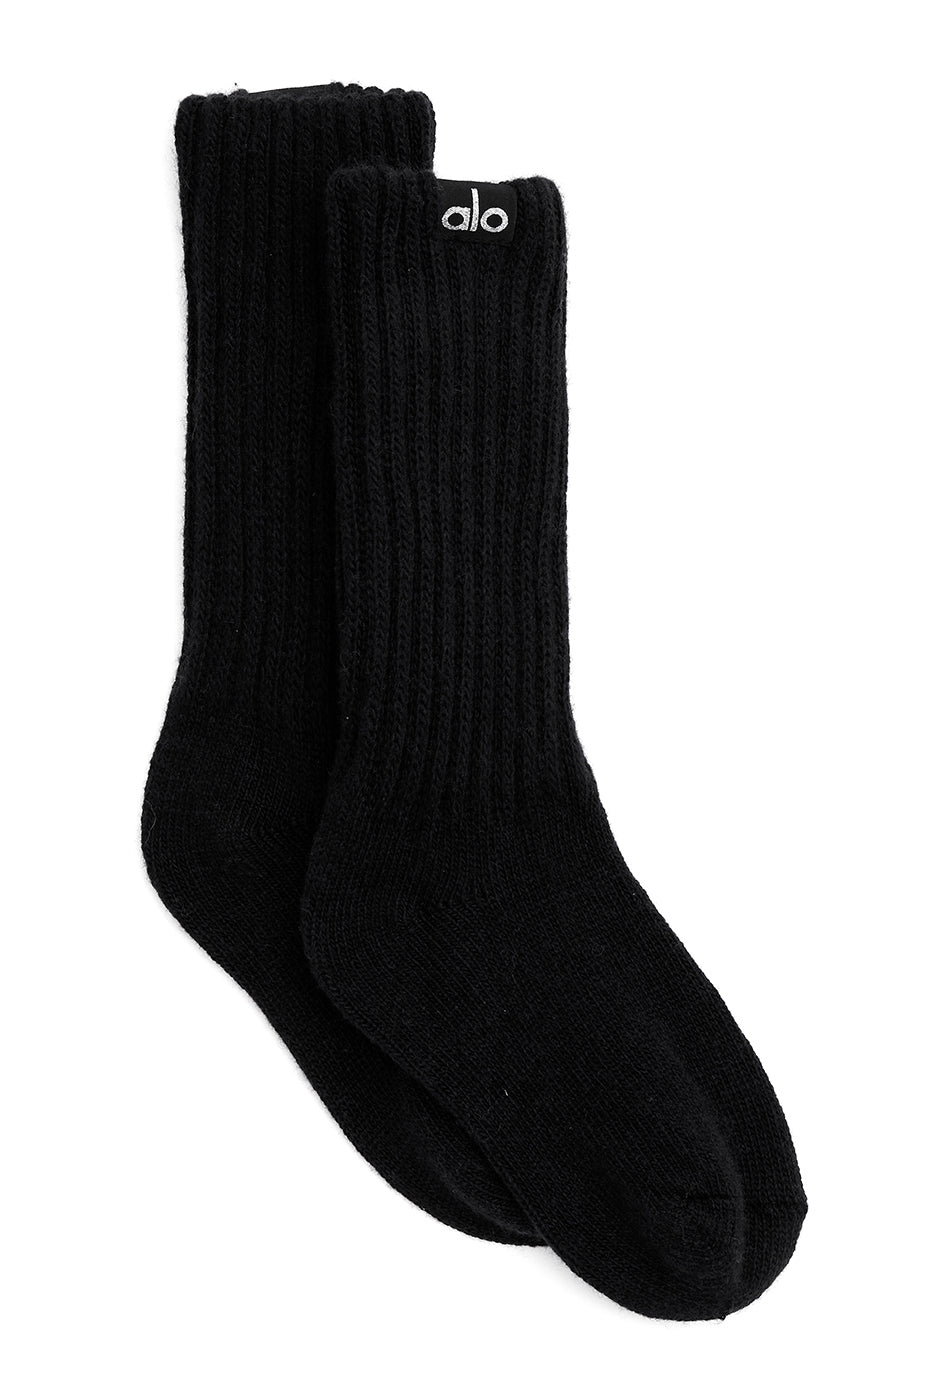 Alo Yoga scrunch socks, throwback socks new. Selling as bundle.